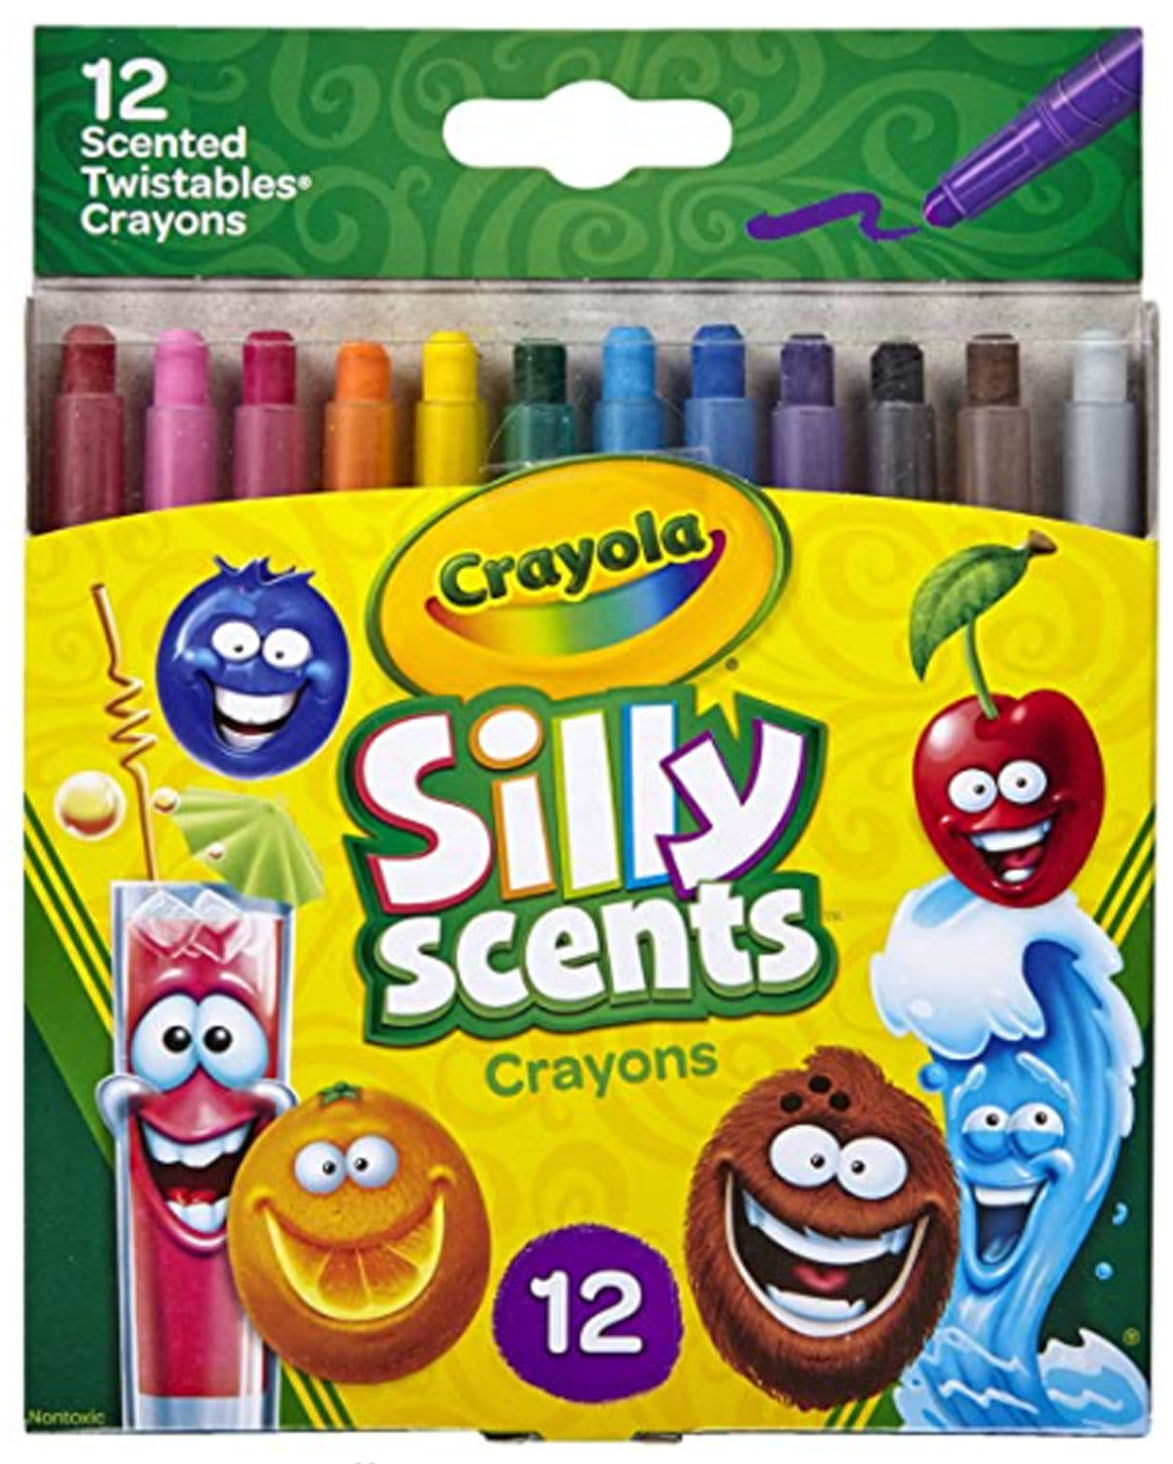 Twistable Crayons (24ct)